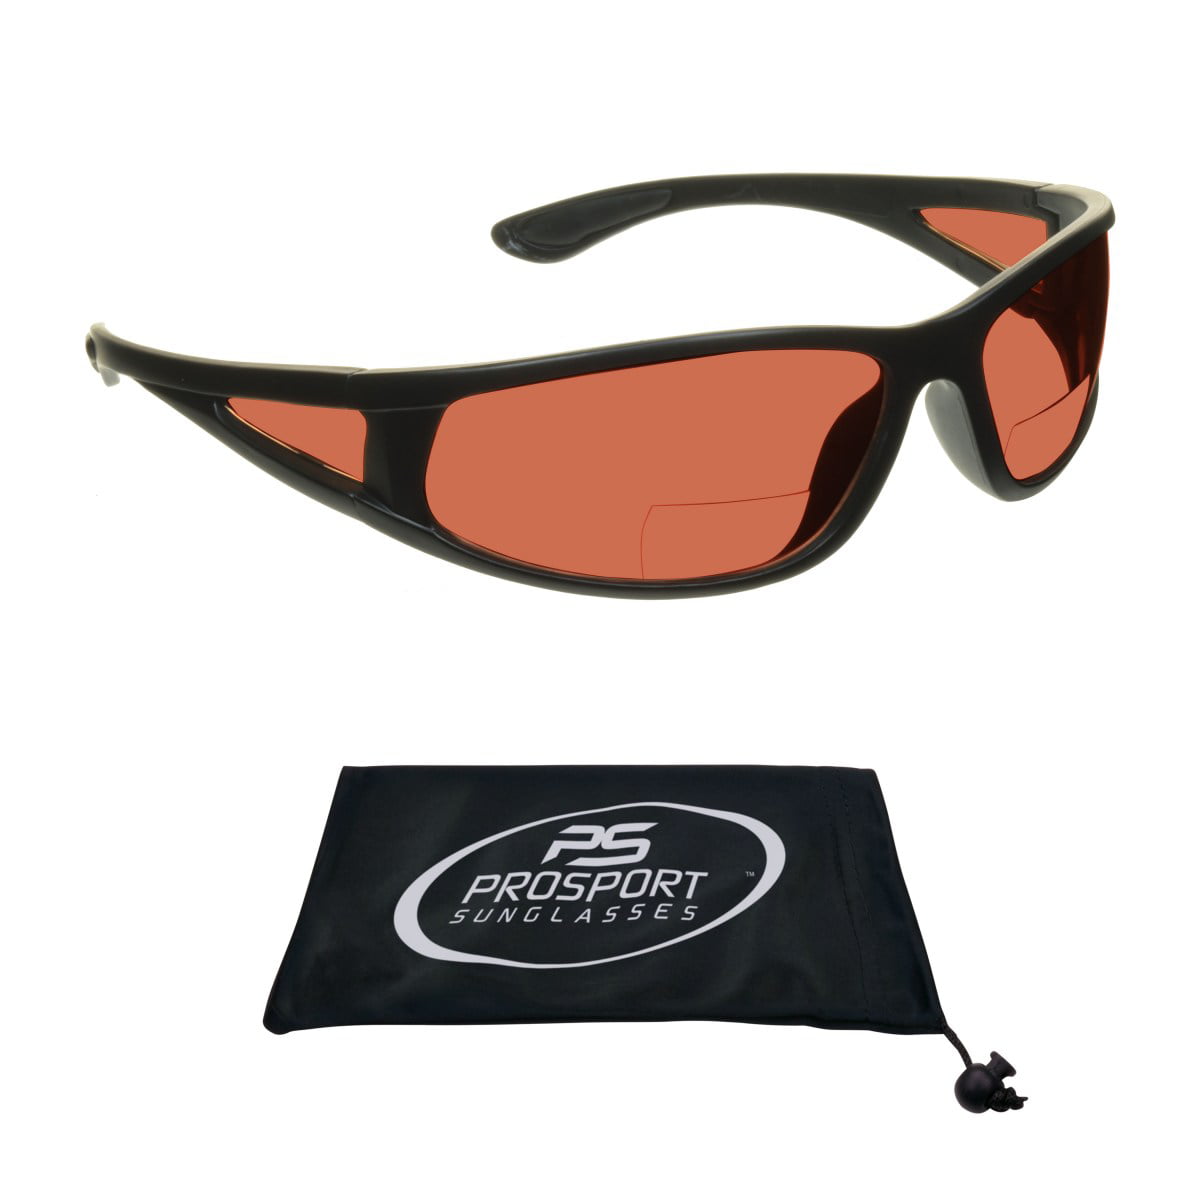 Prosport Bifocal Reader Wrap Sunglasses Side Shield Blue Light Blocking Amber Hd High